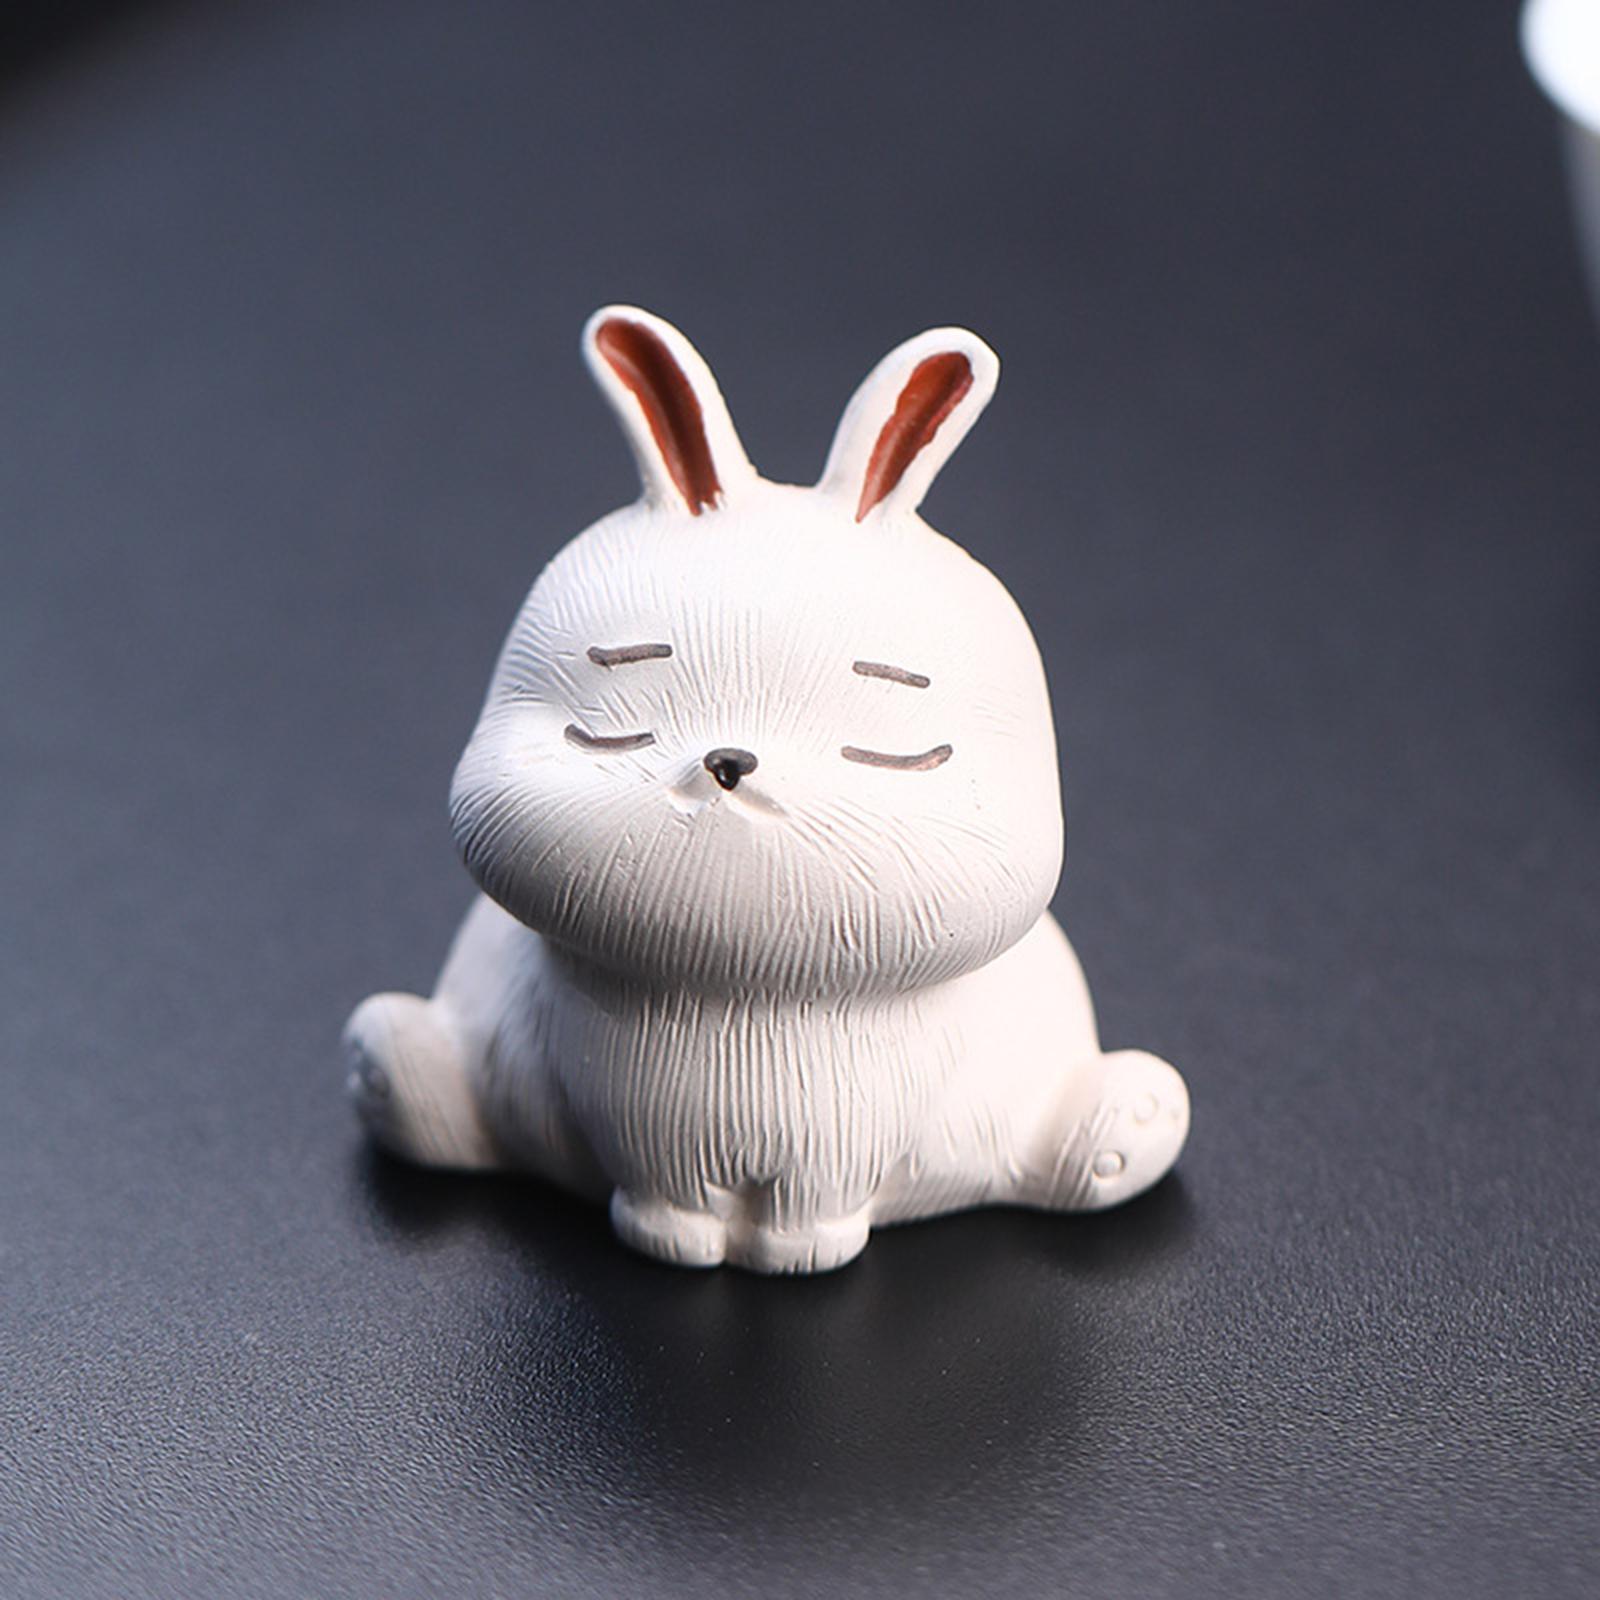 Rabbit Figurine Tea Pet Sculpture Bunny Statue for Bedroom Table Centerpiece White